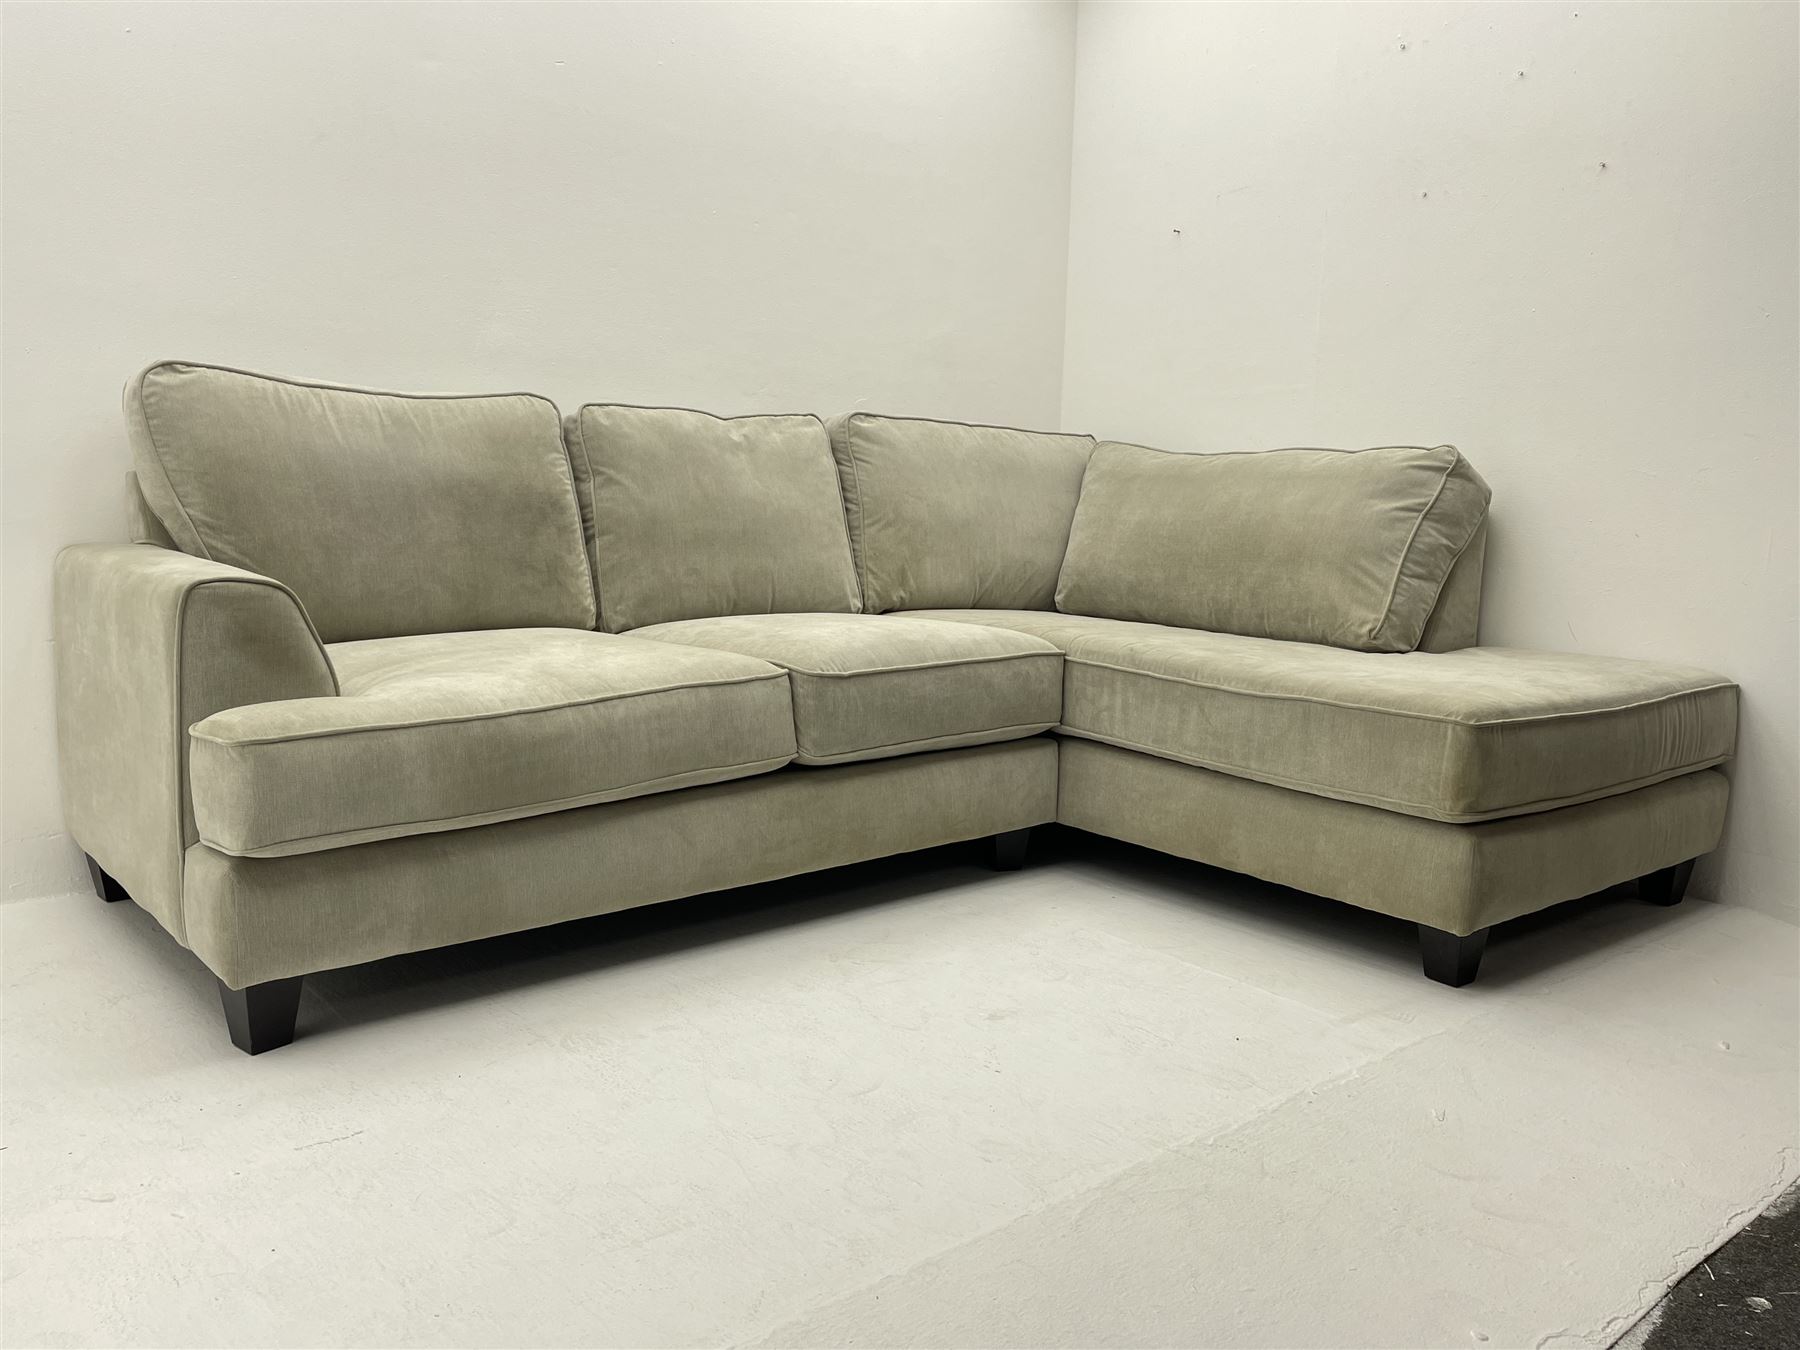 Corner sofa upholstered in light grey fabric - Image 3 of 3